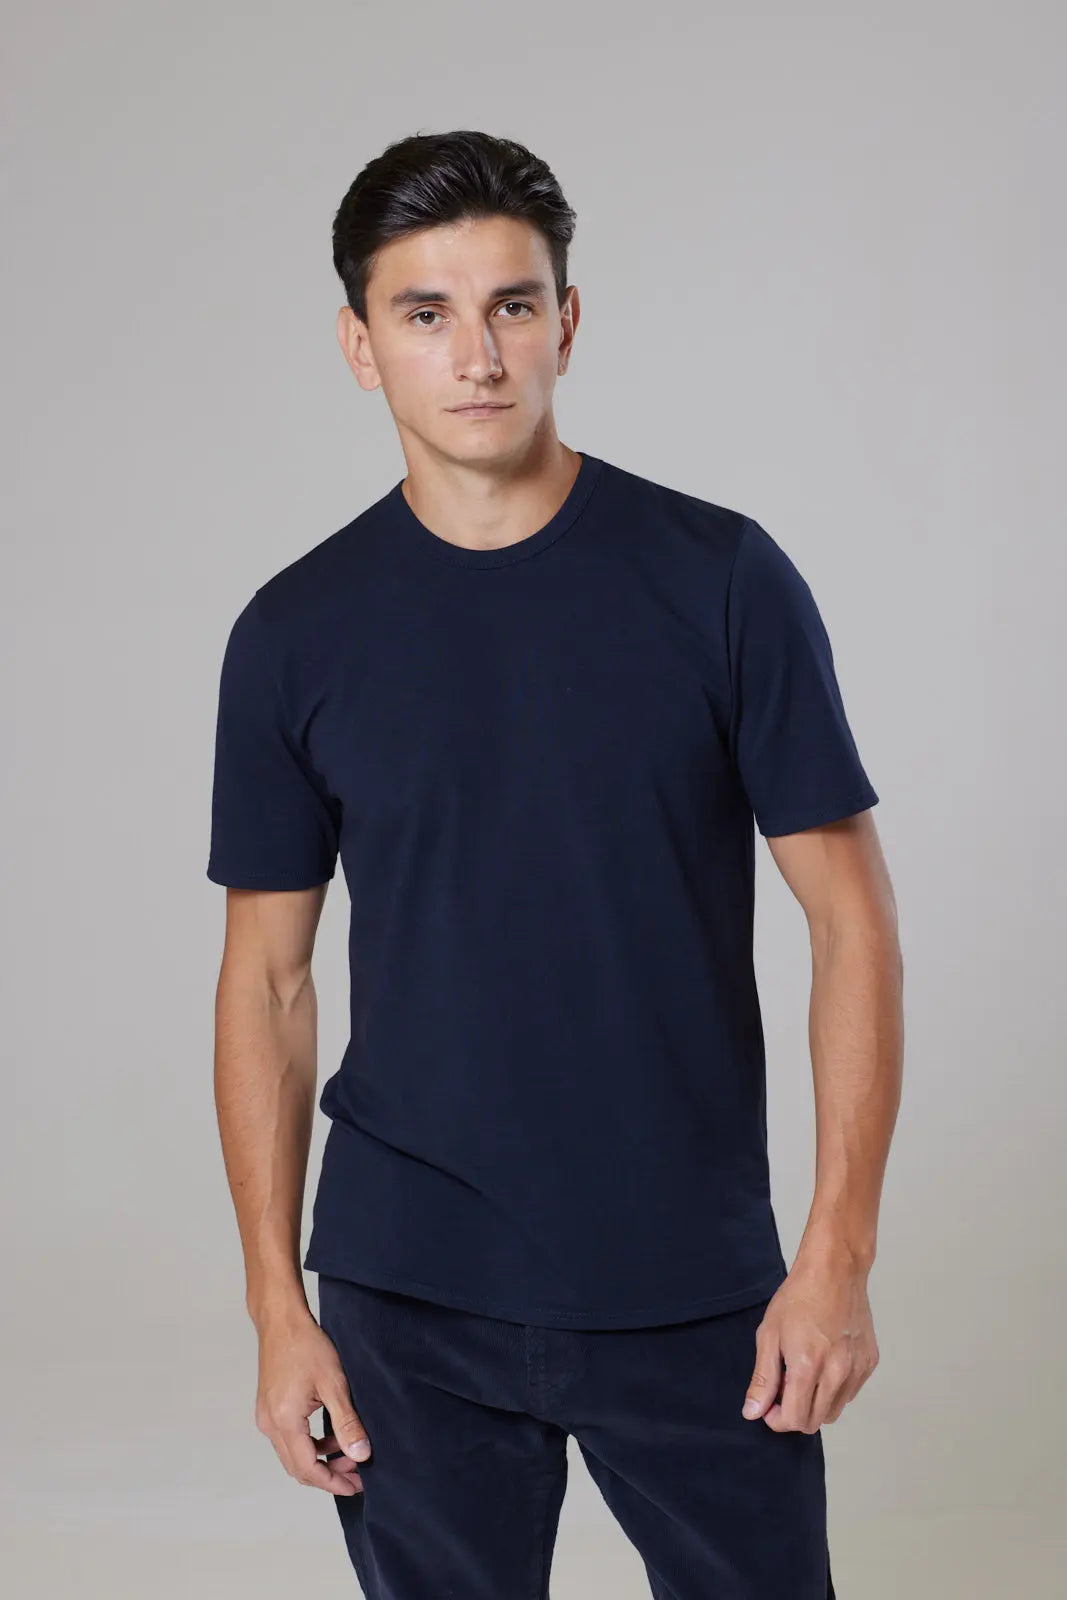 Trueman Short Sleeve Tee Shirt - Navy - Wear London